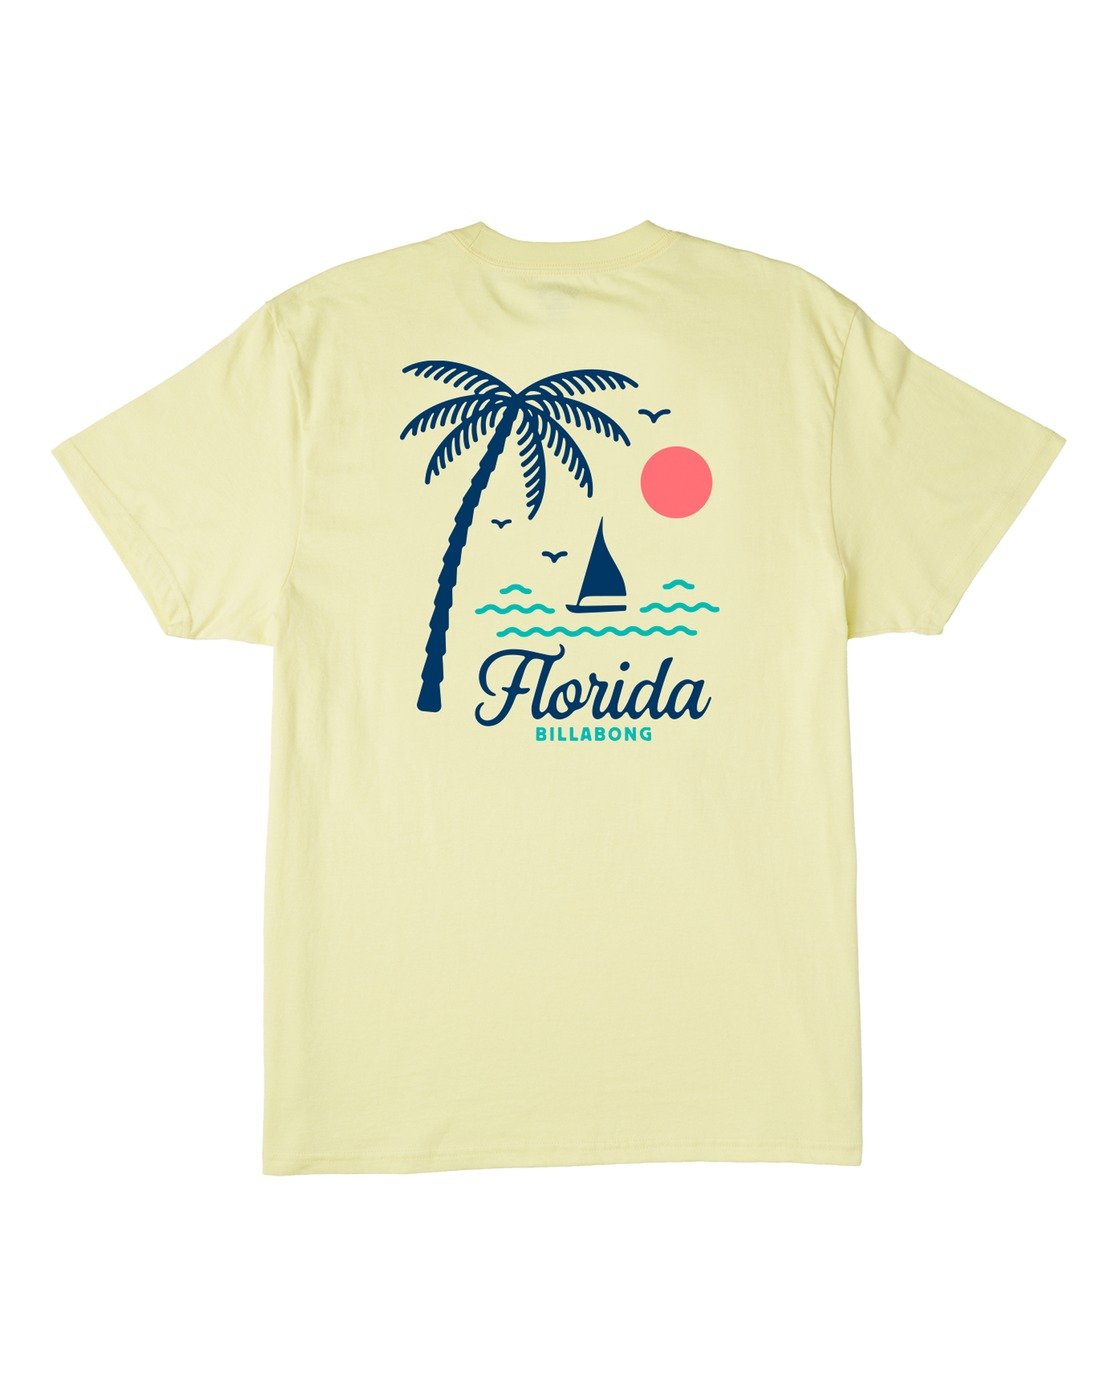 Billabong Daysailor Florida Short Sleeve T-Shirt